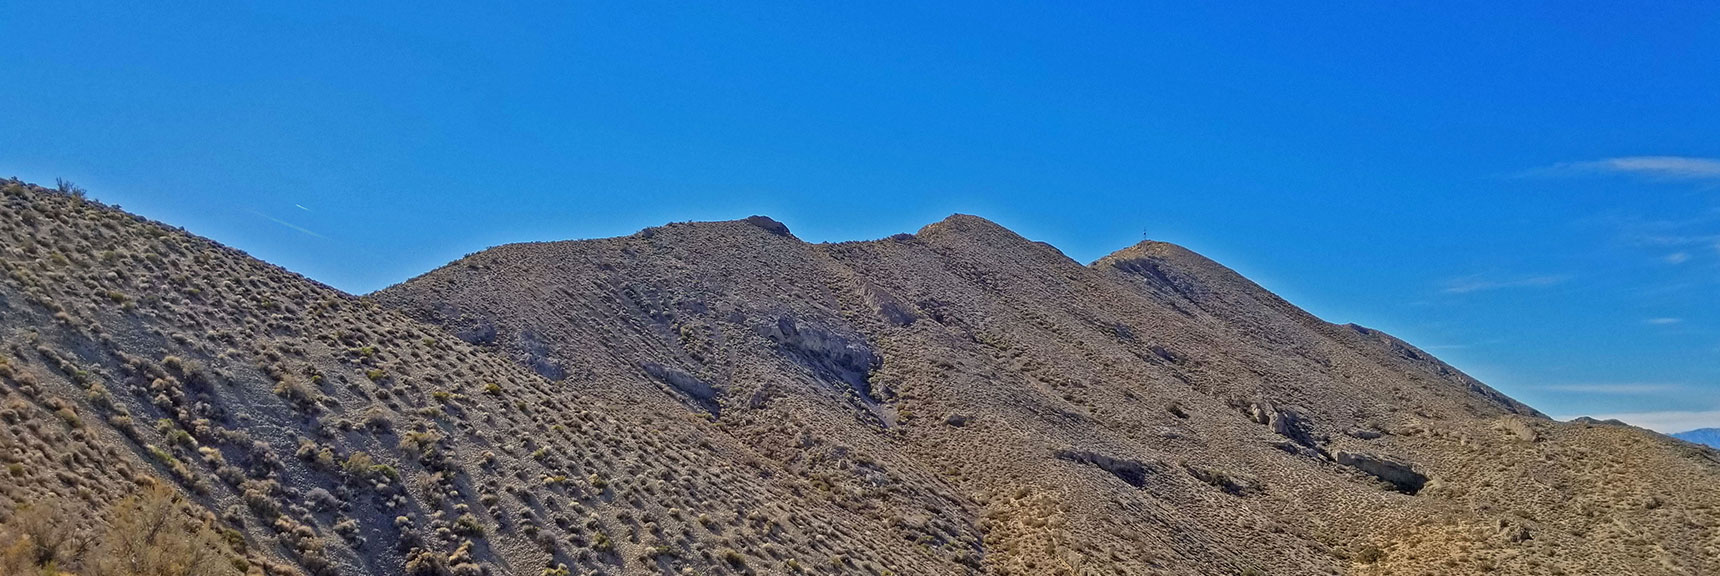 View Across the Upper Ridge to Gass Peak's Summit. | Gass Peak Grand Crossing | Desert National Wildlife Refuge to Centennial Hills Las Vegas via Gass Peak Summit by Foot